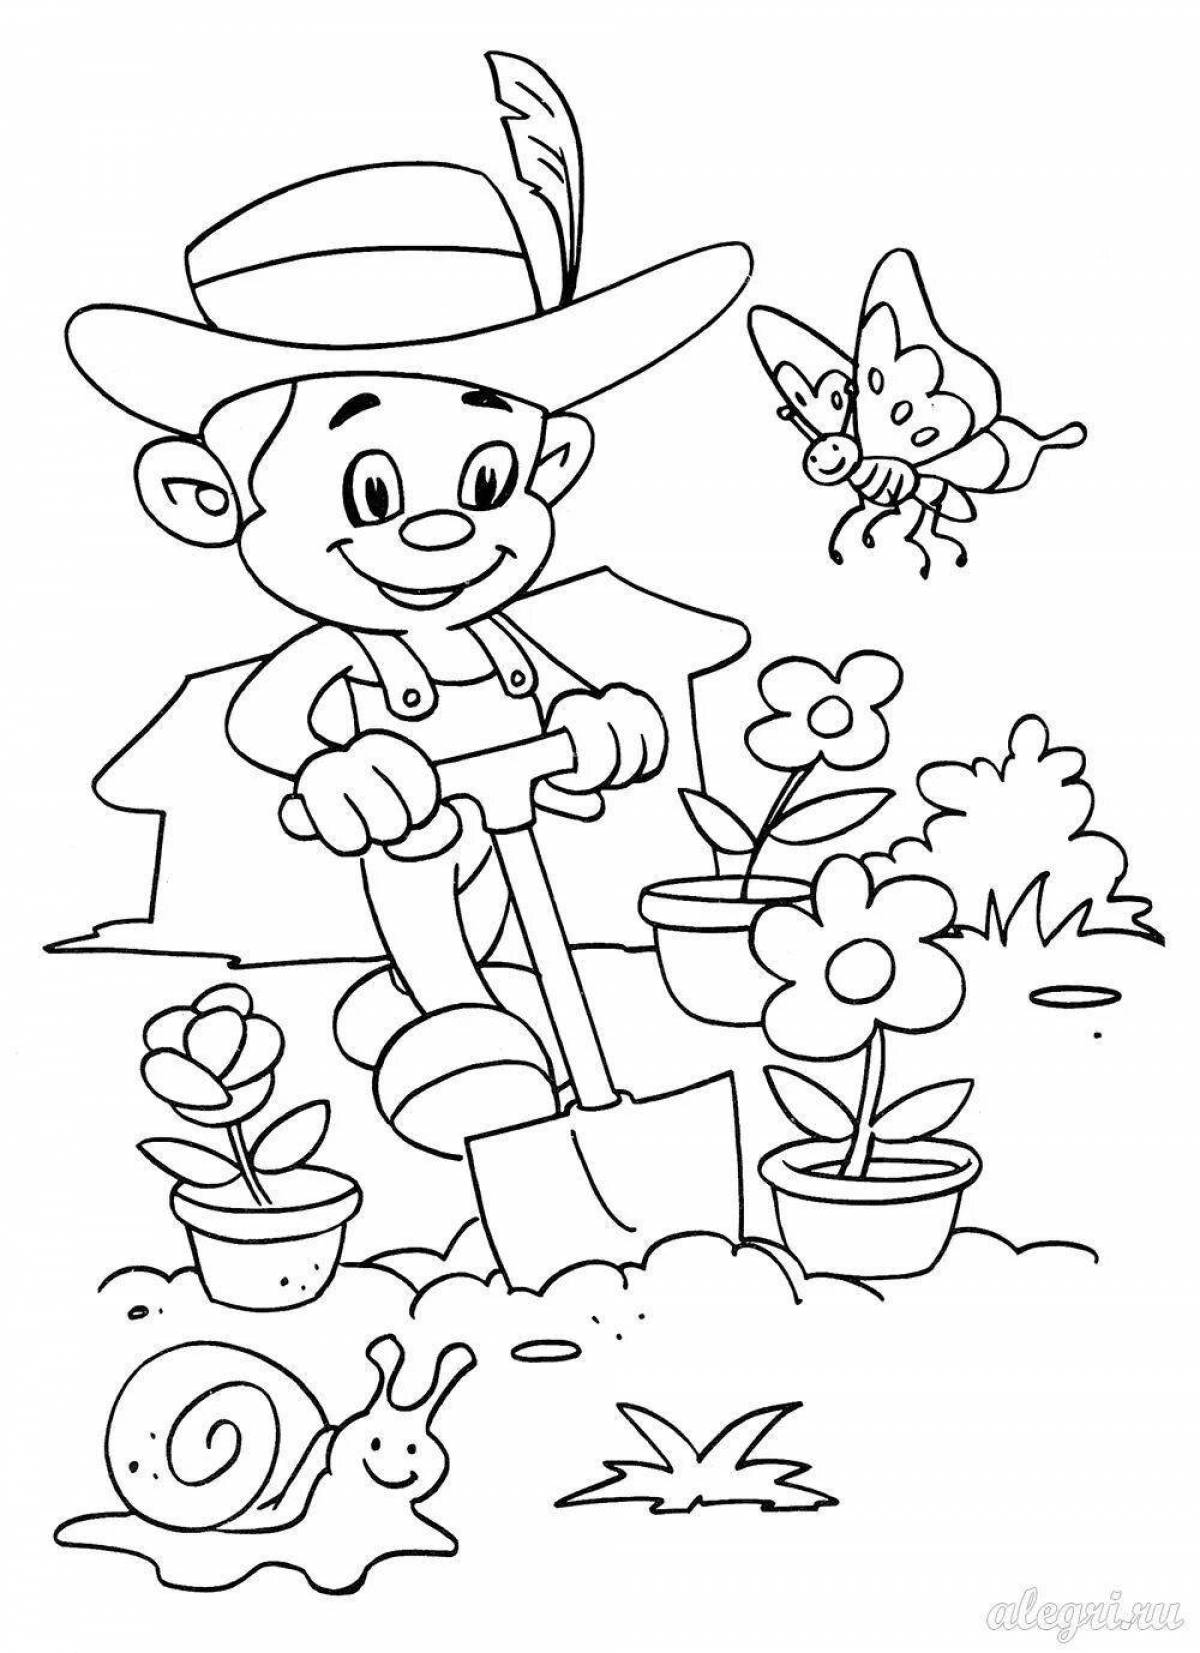 Coloring book busy gardener